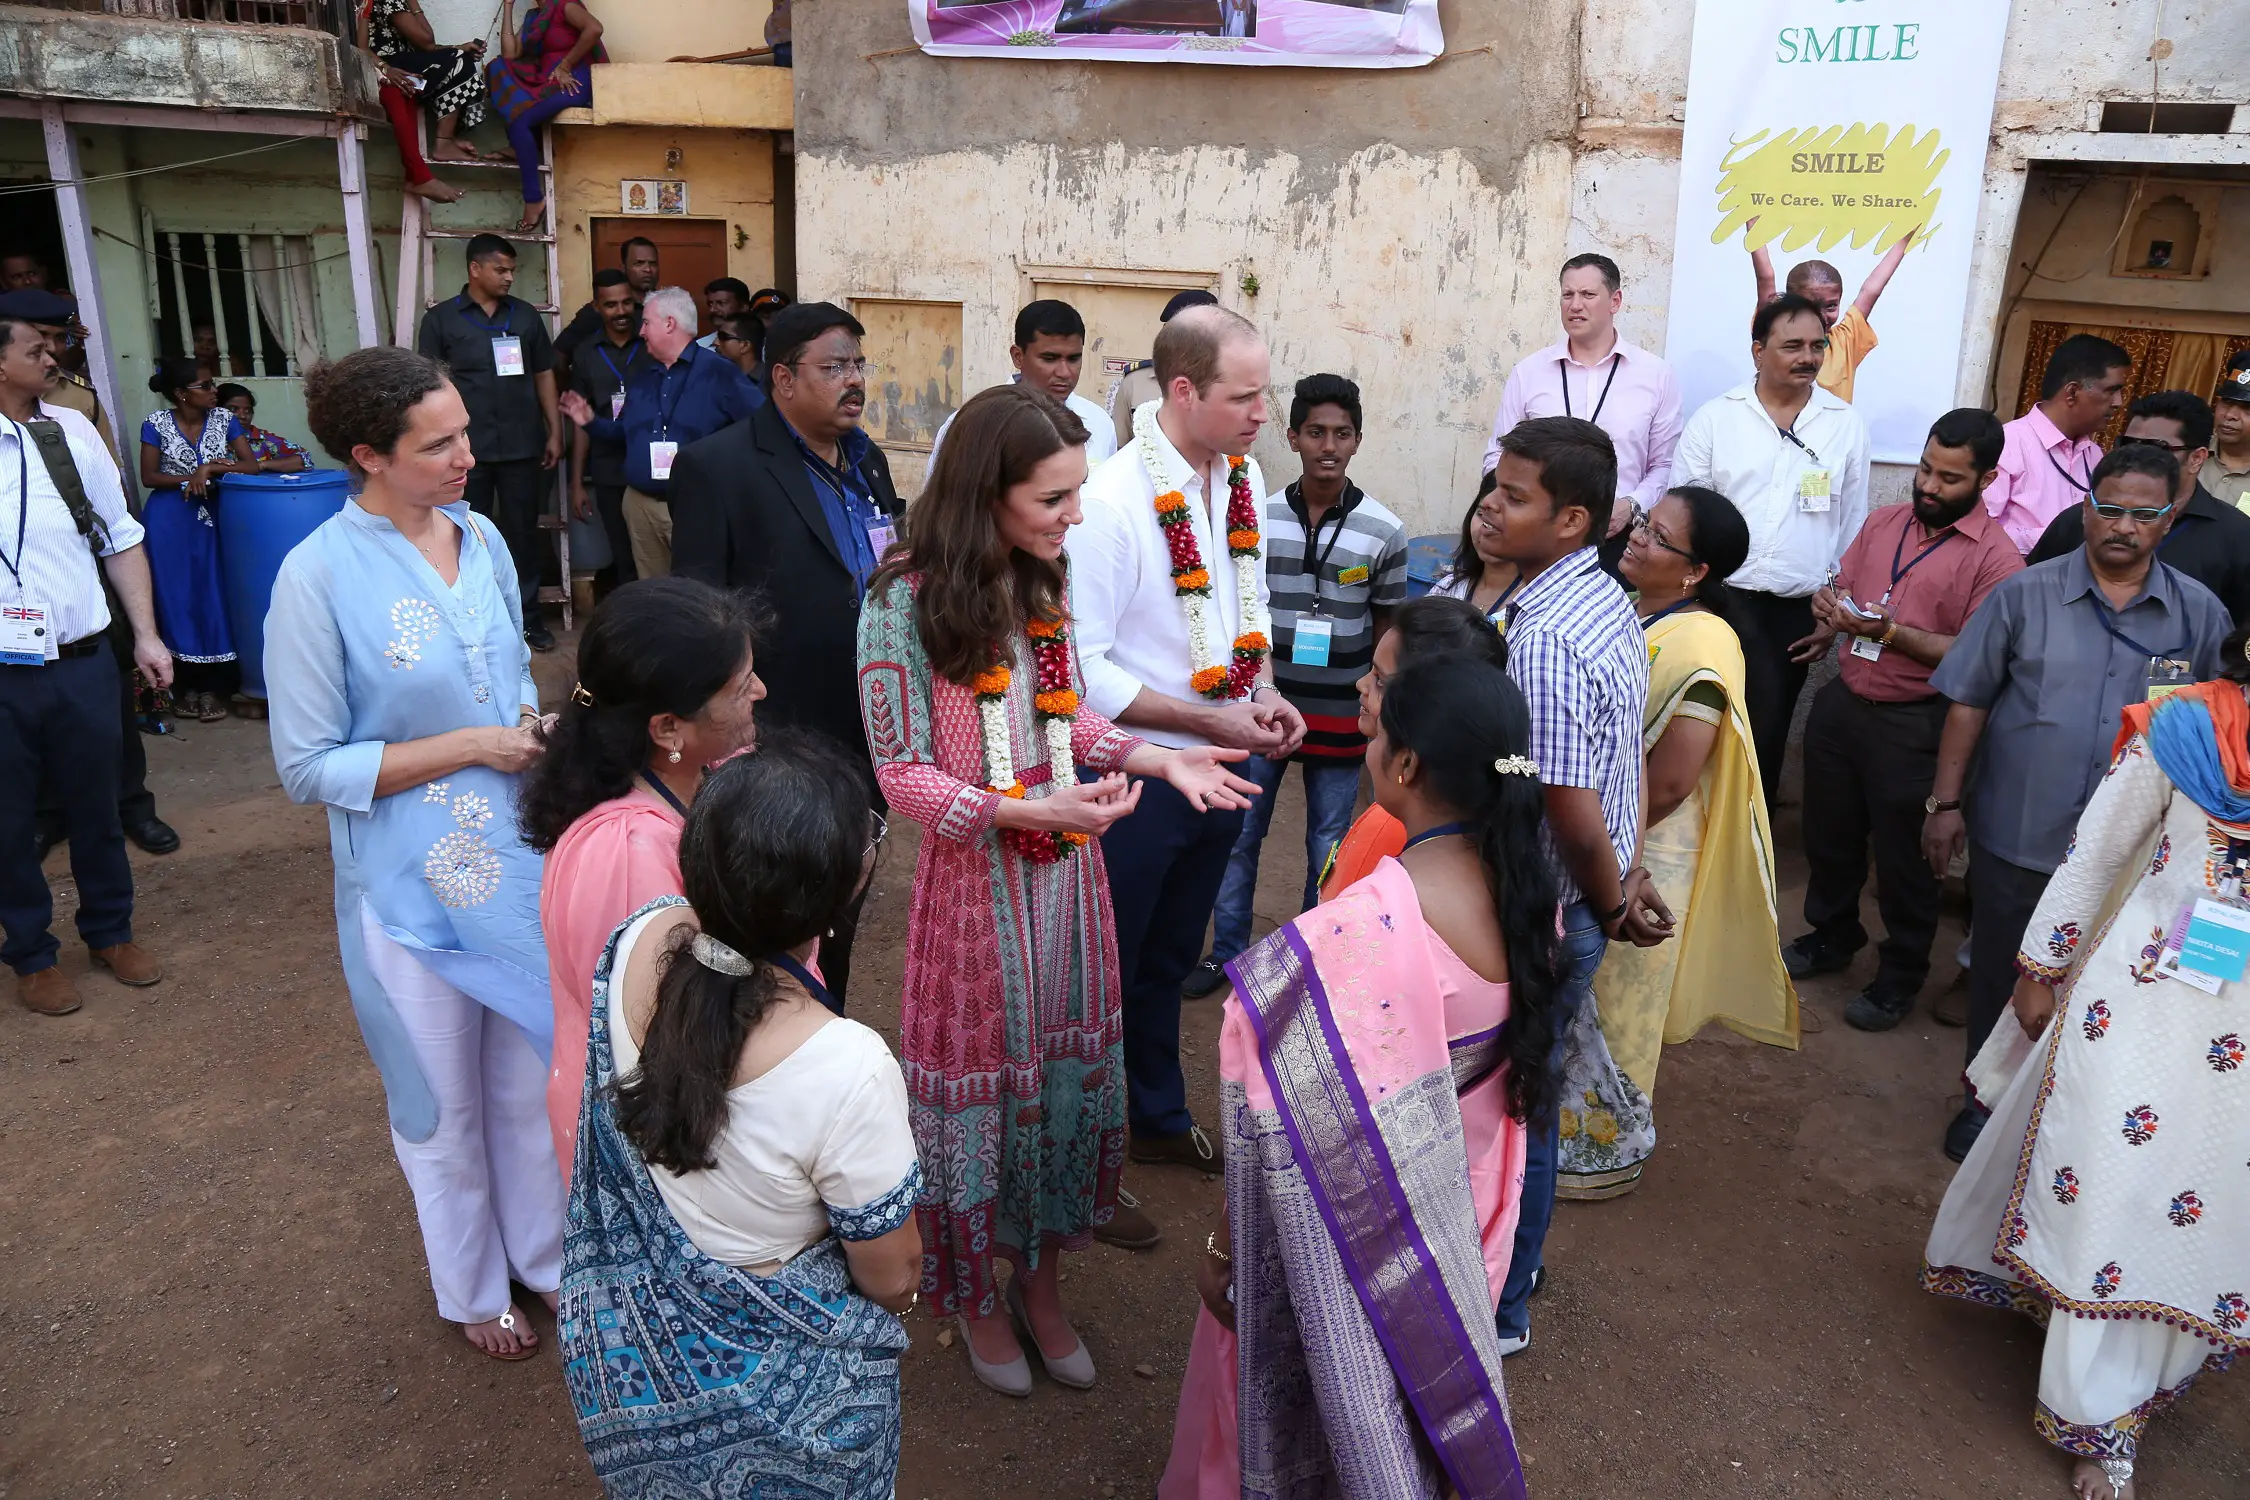 The Duke and Duchess visited the slums in Mumbai